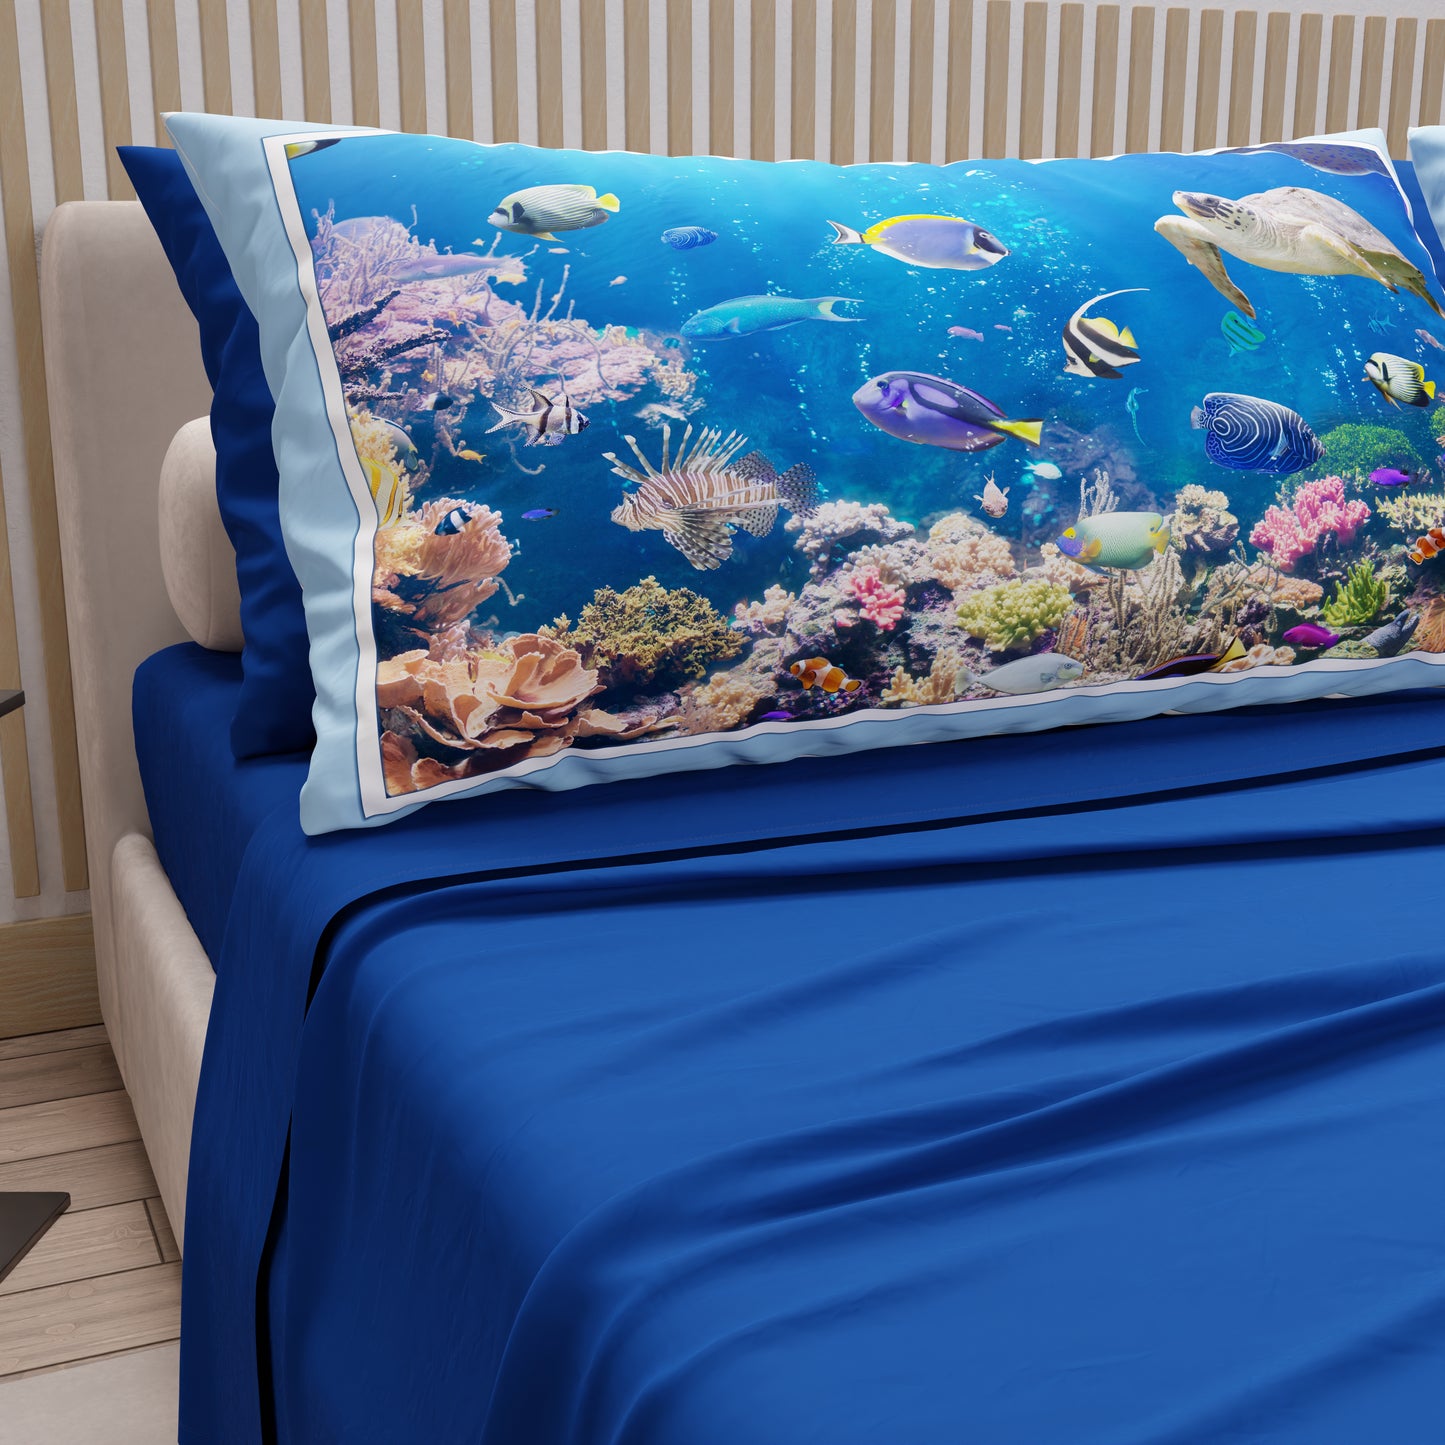 Cotton sheets, bed set with aquarium digital print pillowcases